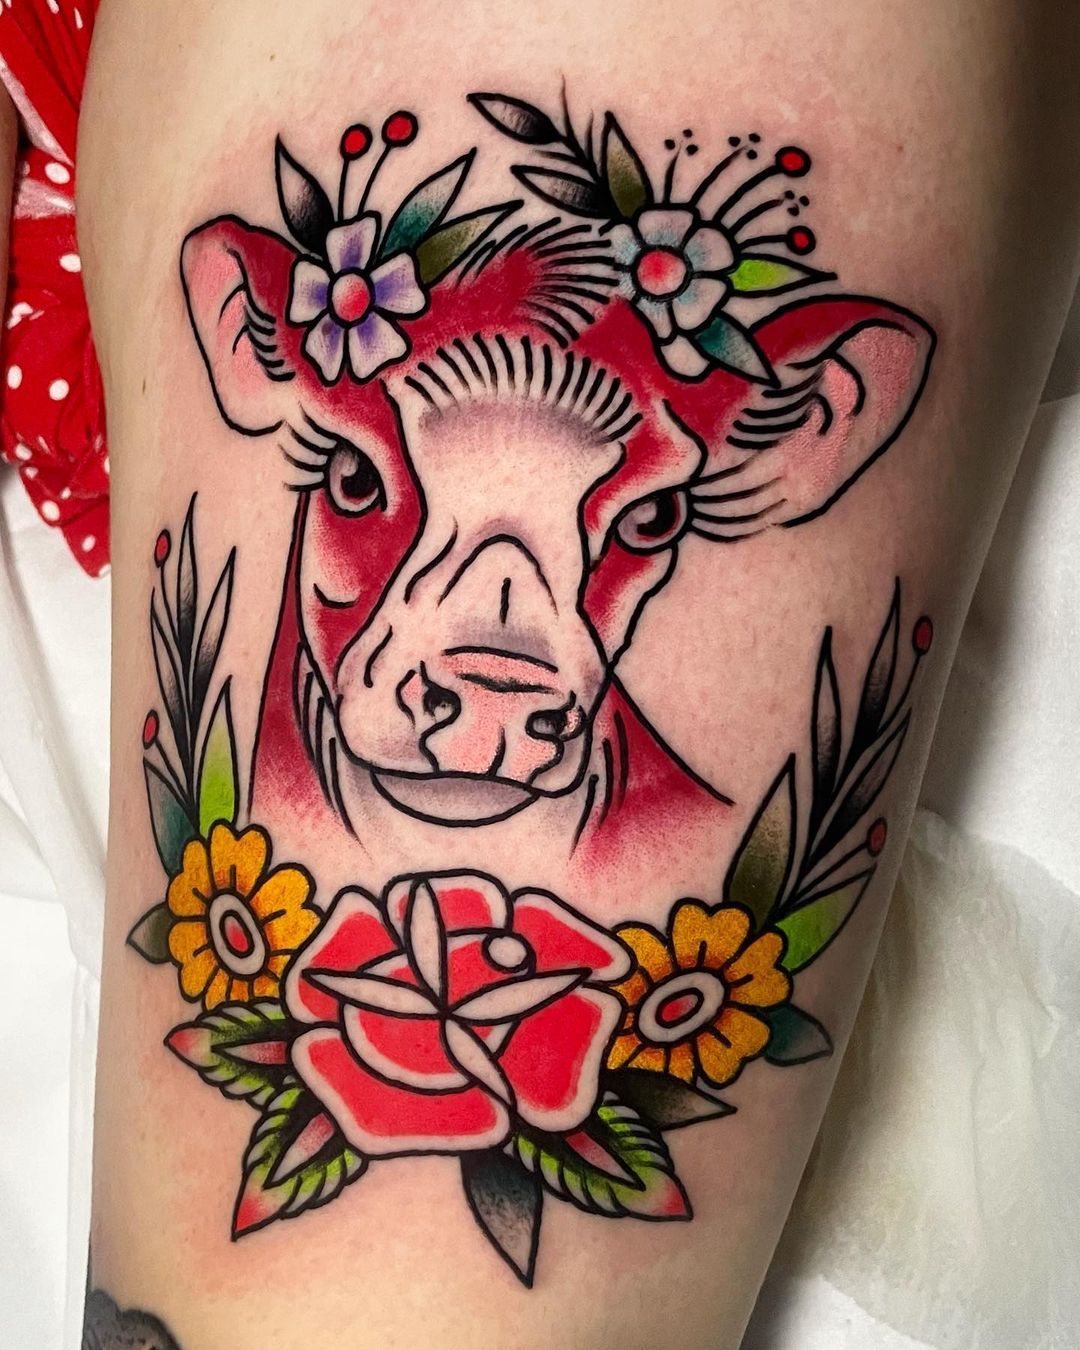 Explore the 46 Best Cow Tattoo Ideas 2019  Tattoodo